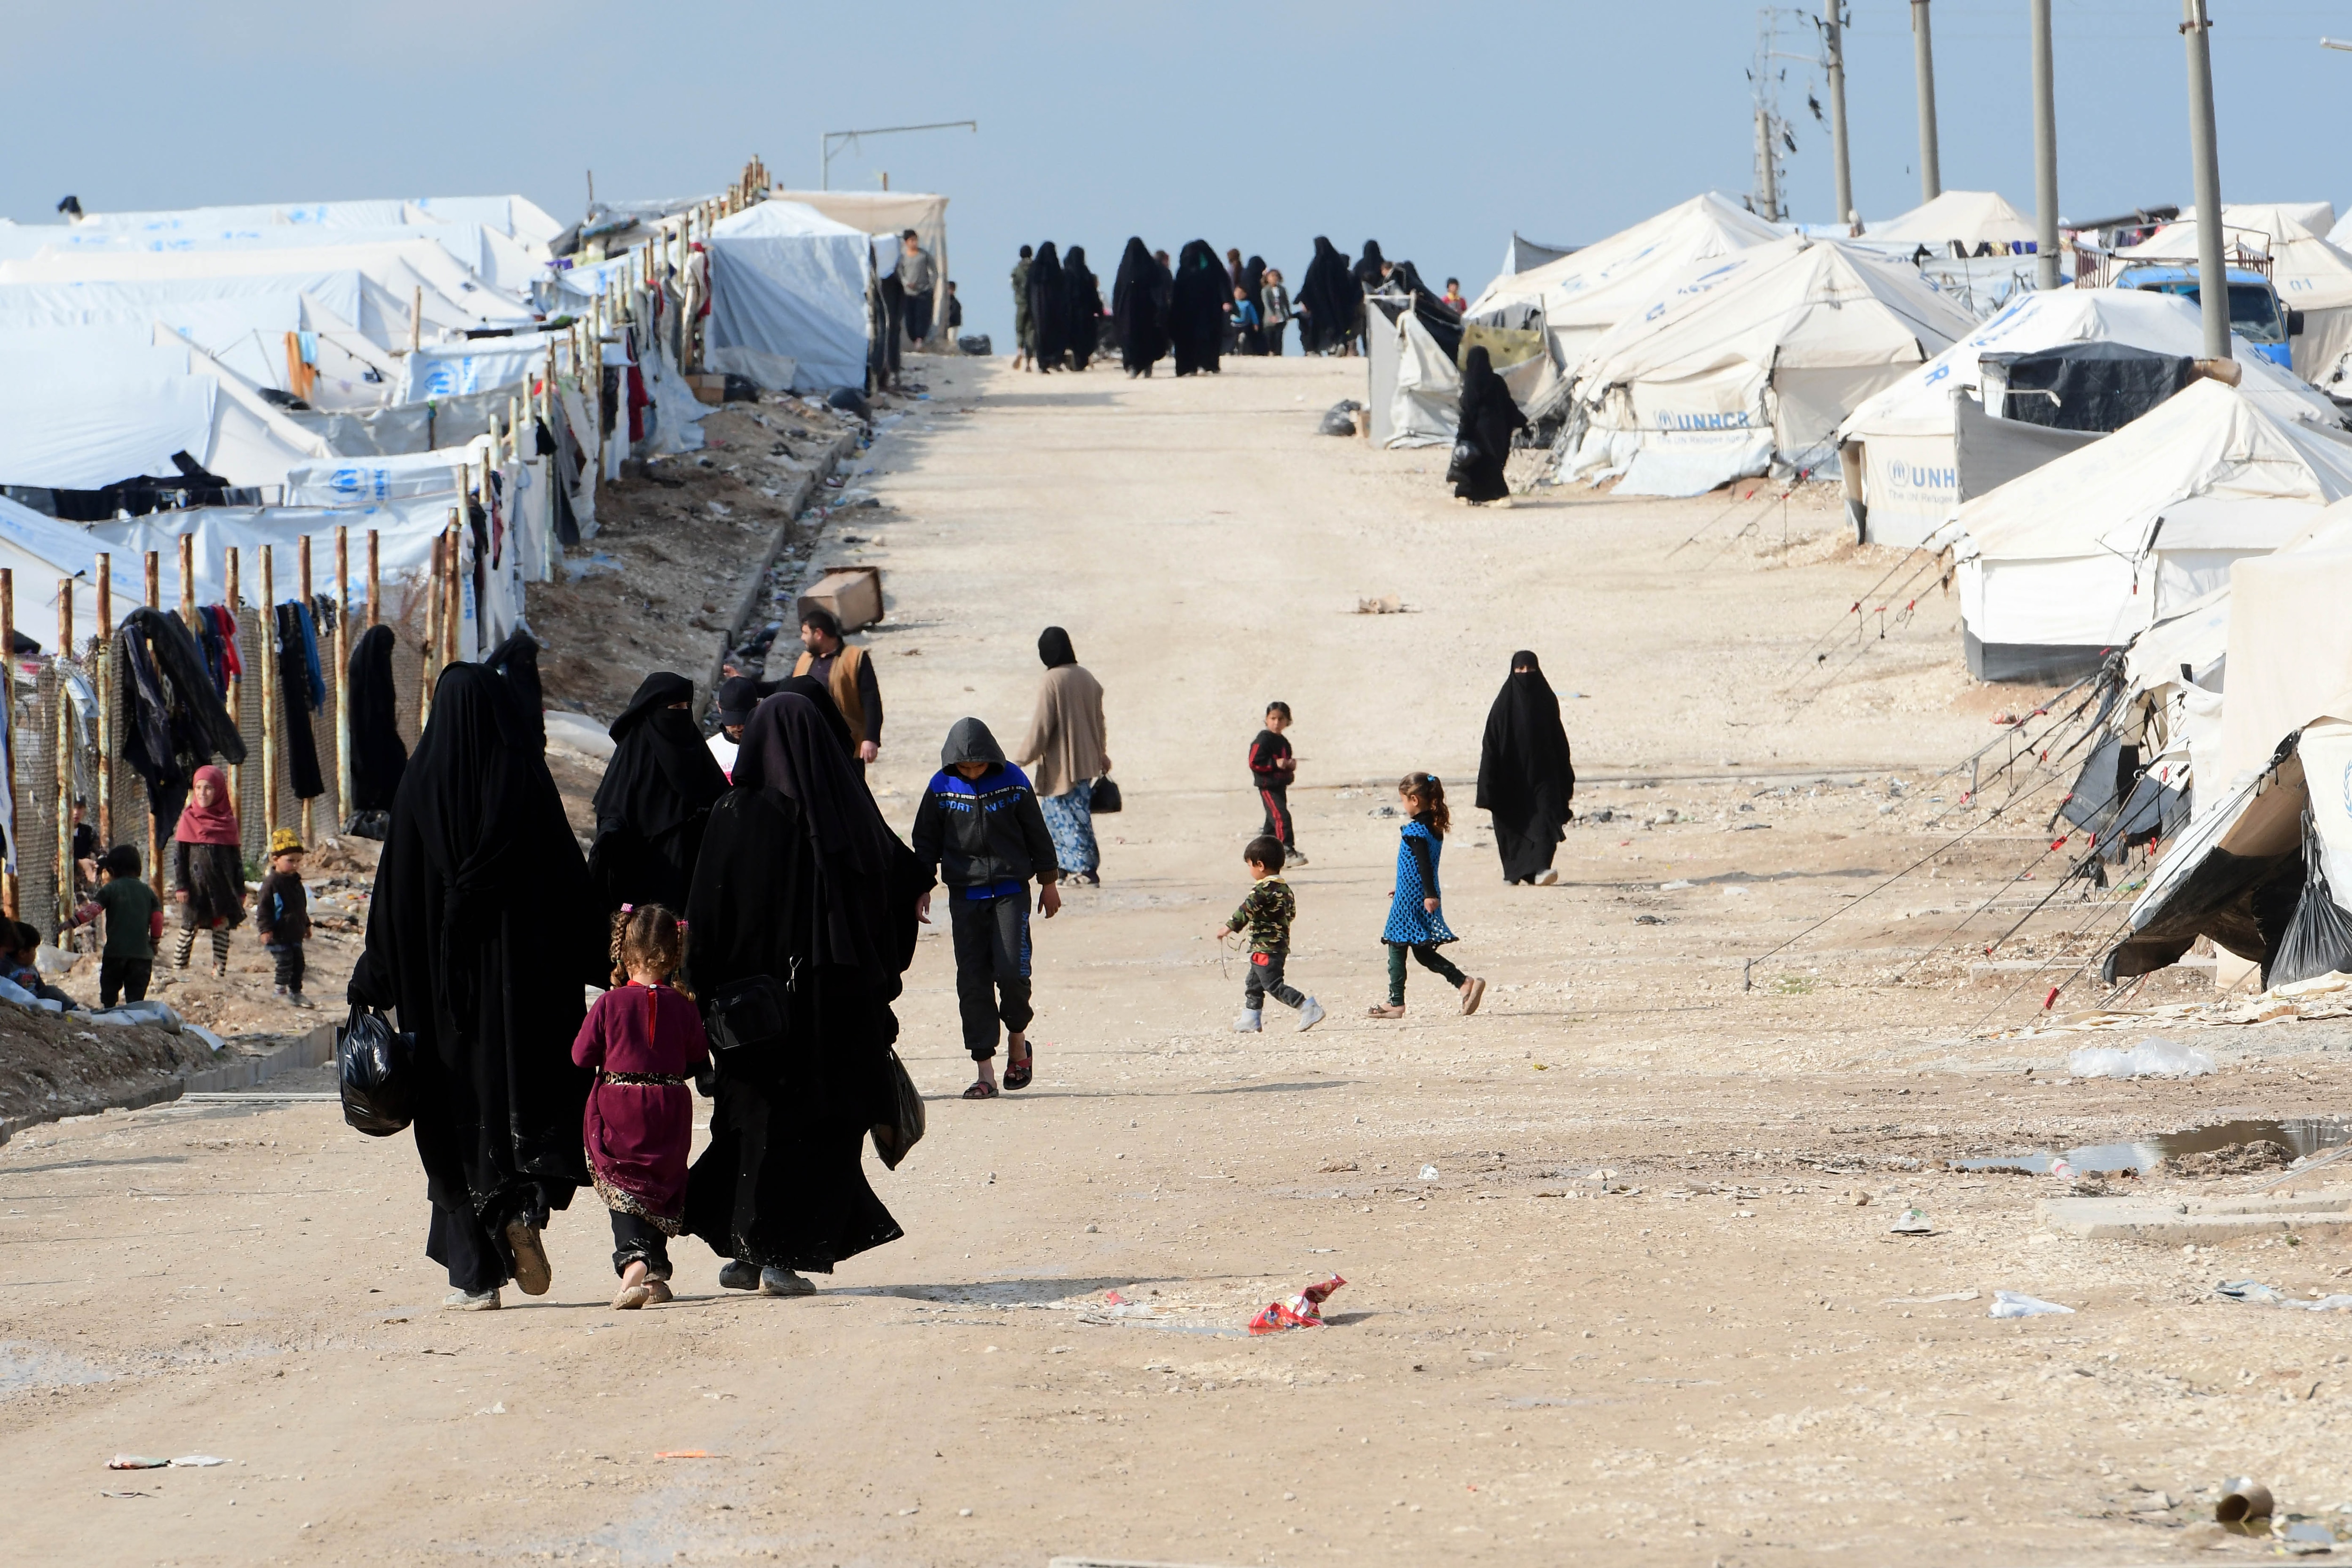 Women and children walk inside the camp.